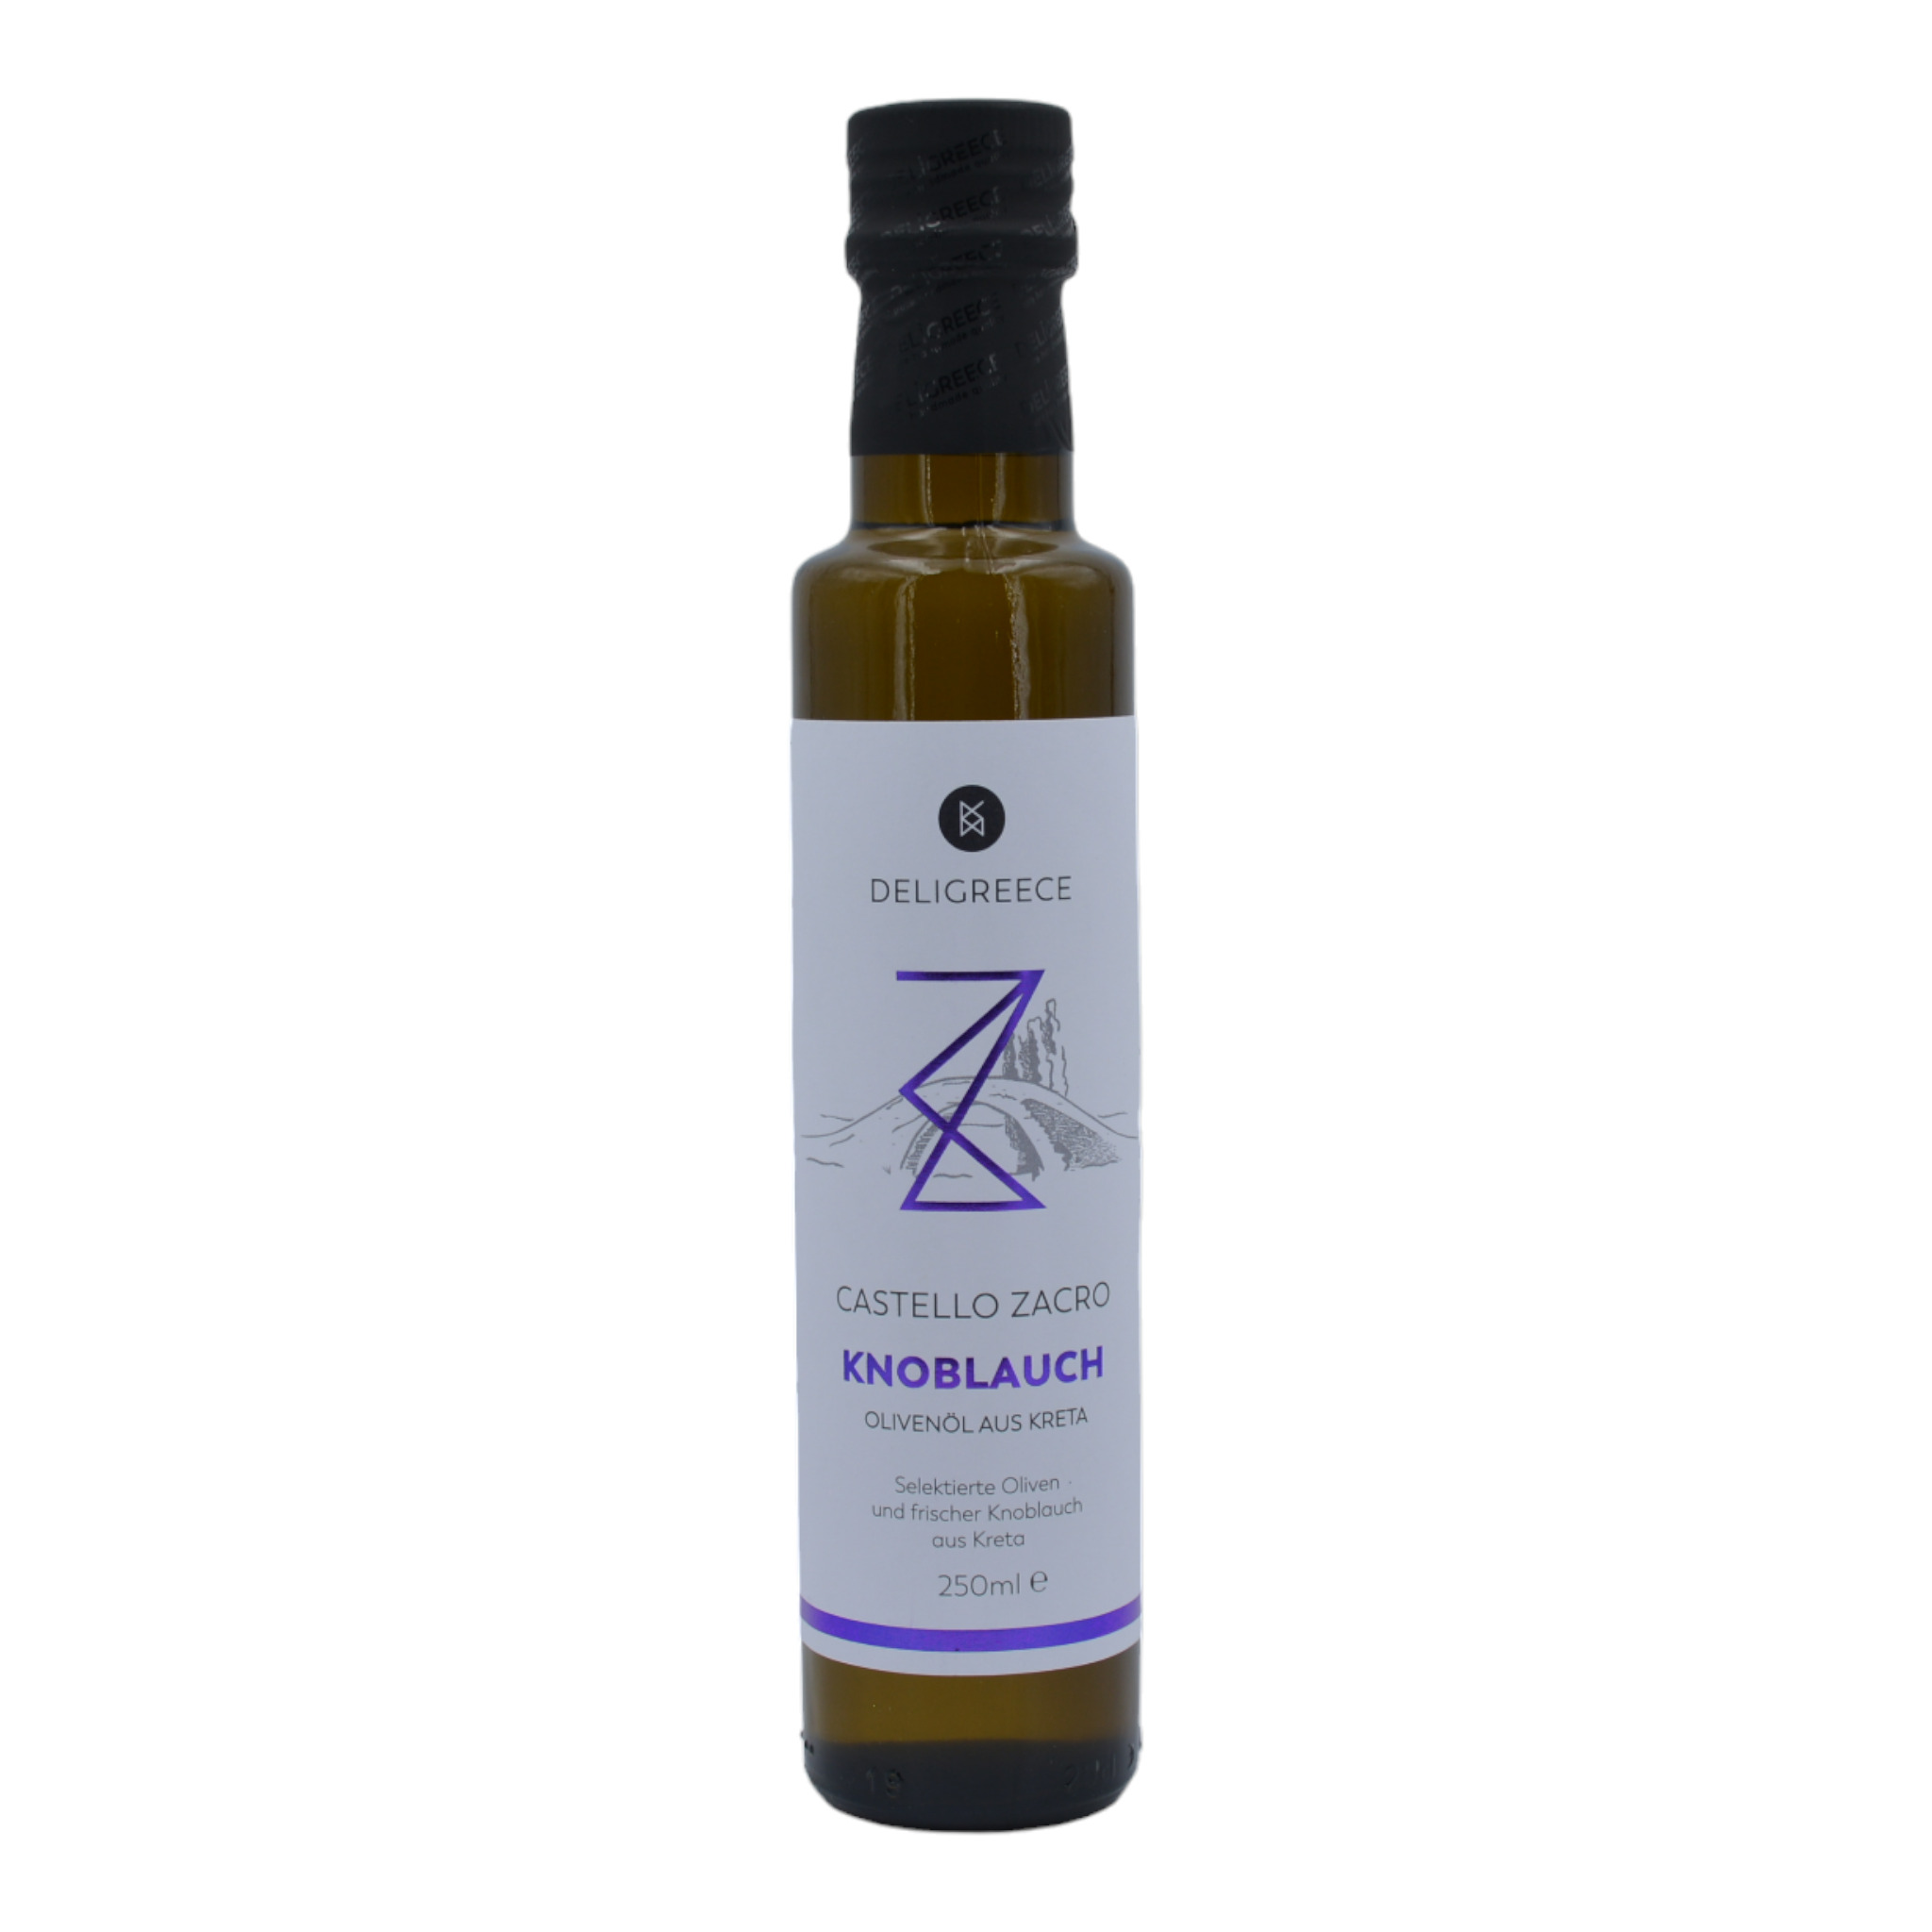 4260054323265Deligreece Castello Zacro Knoblauch Oliveöl aus Kreta f